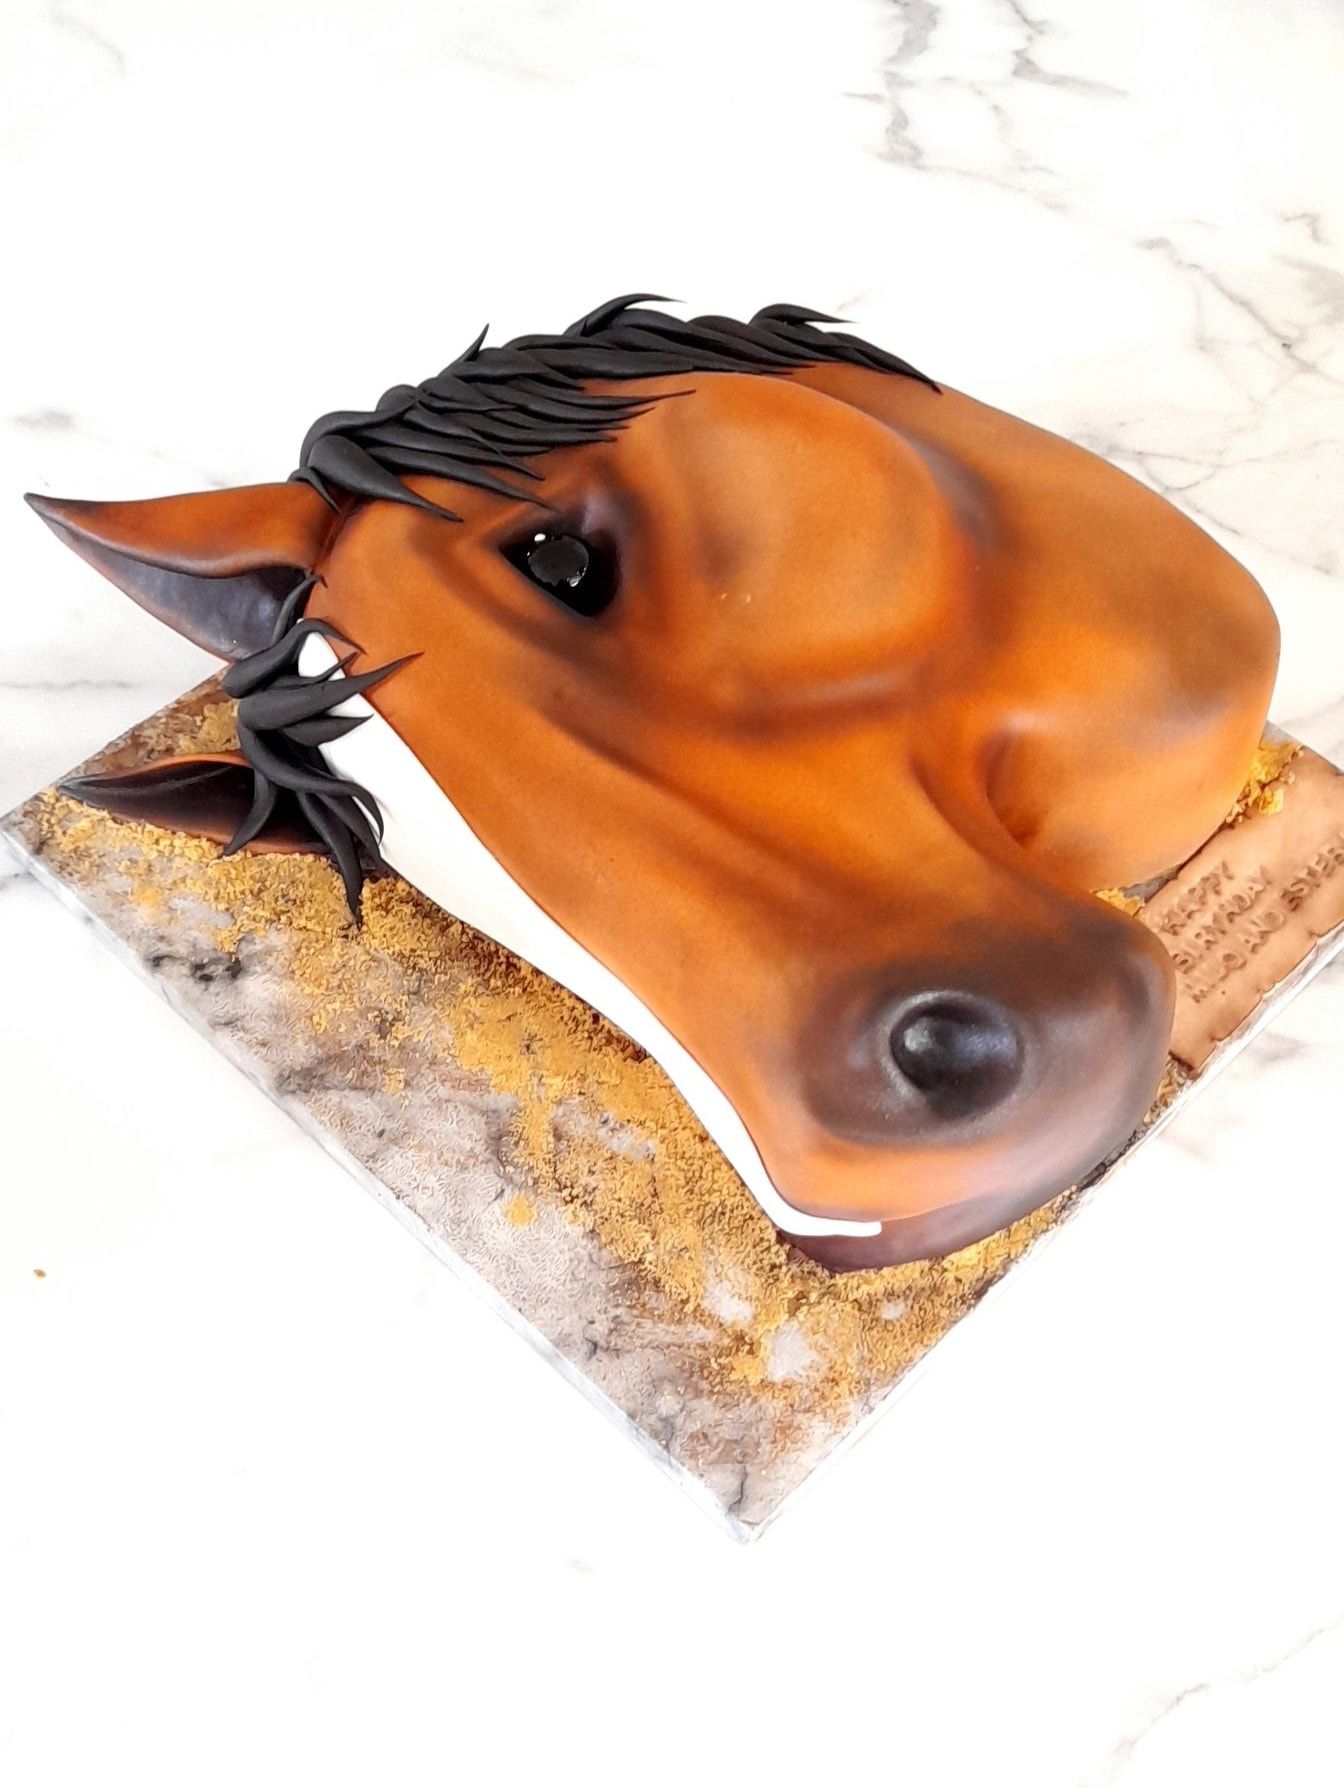 horse head cakes Bath